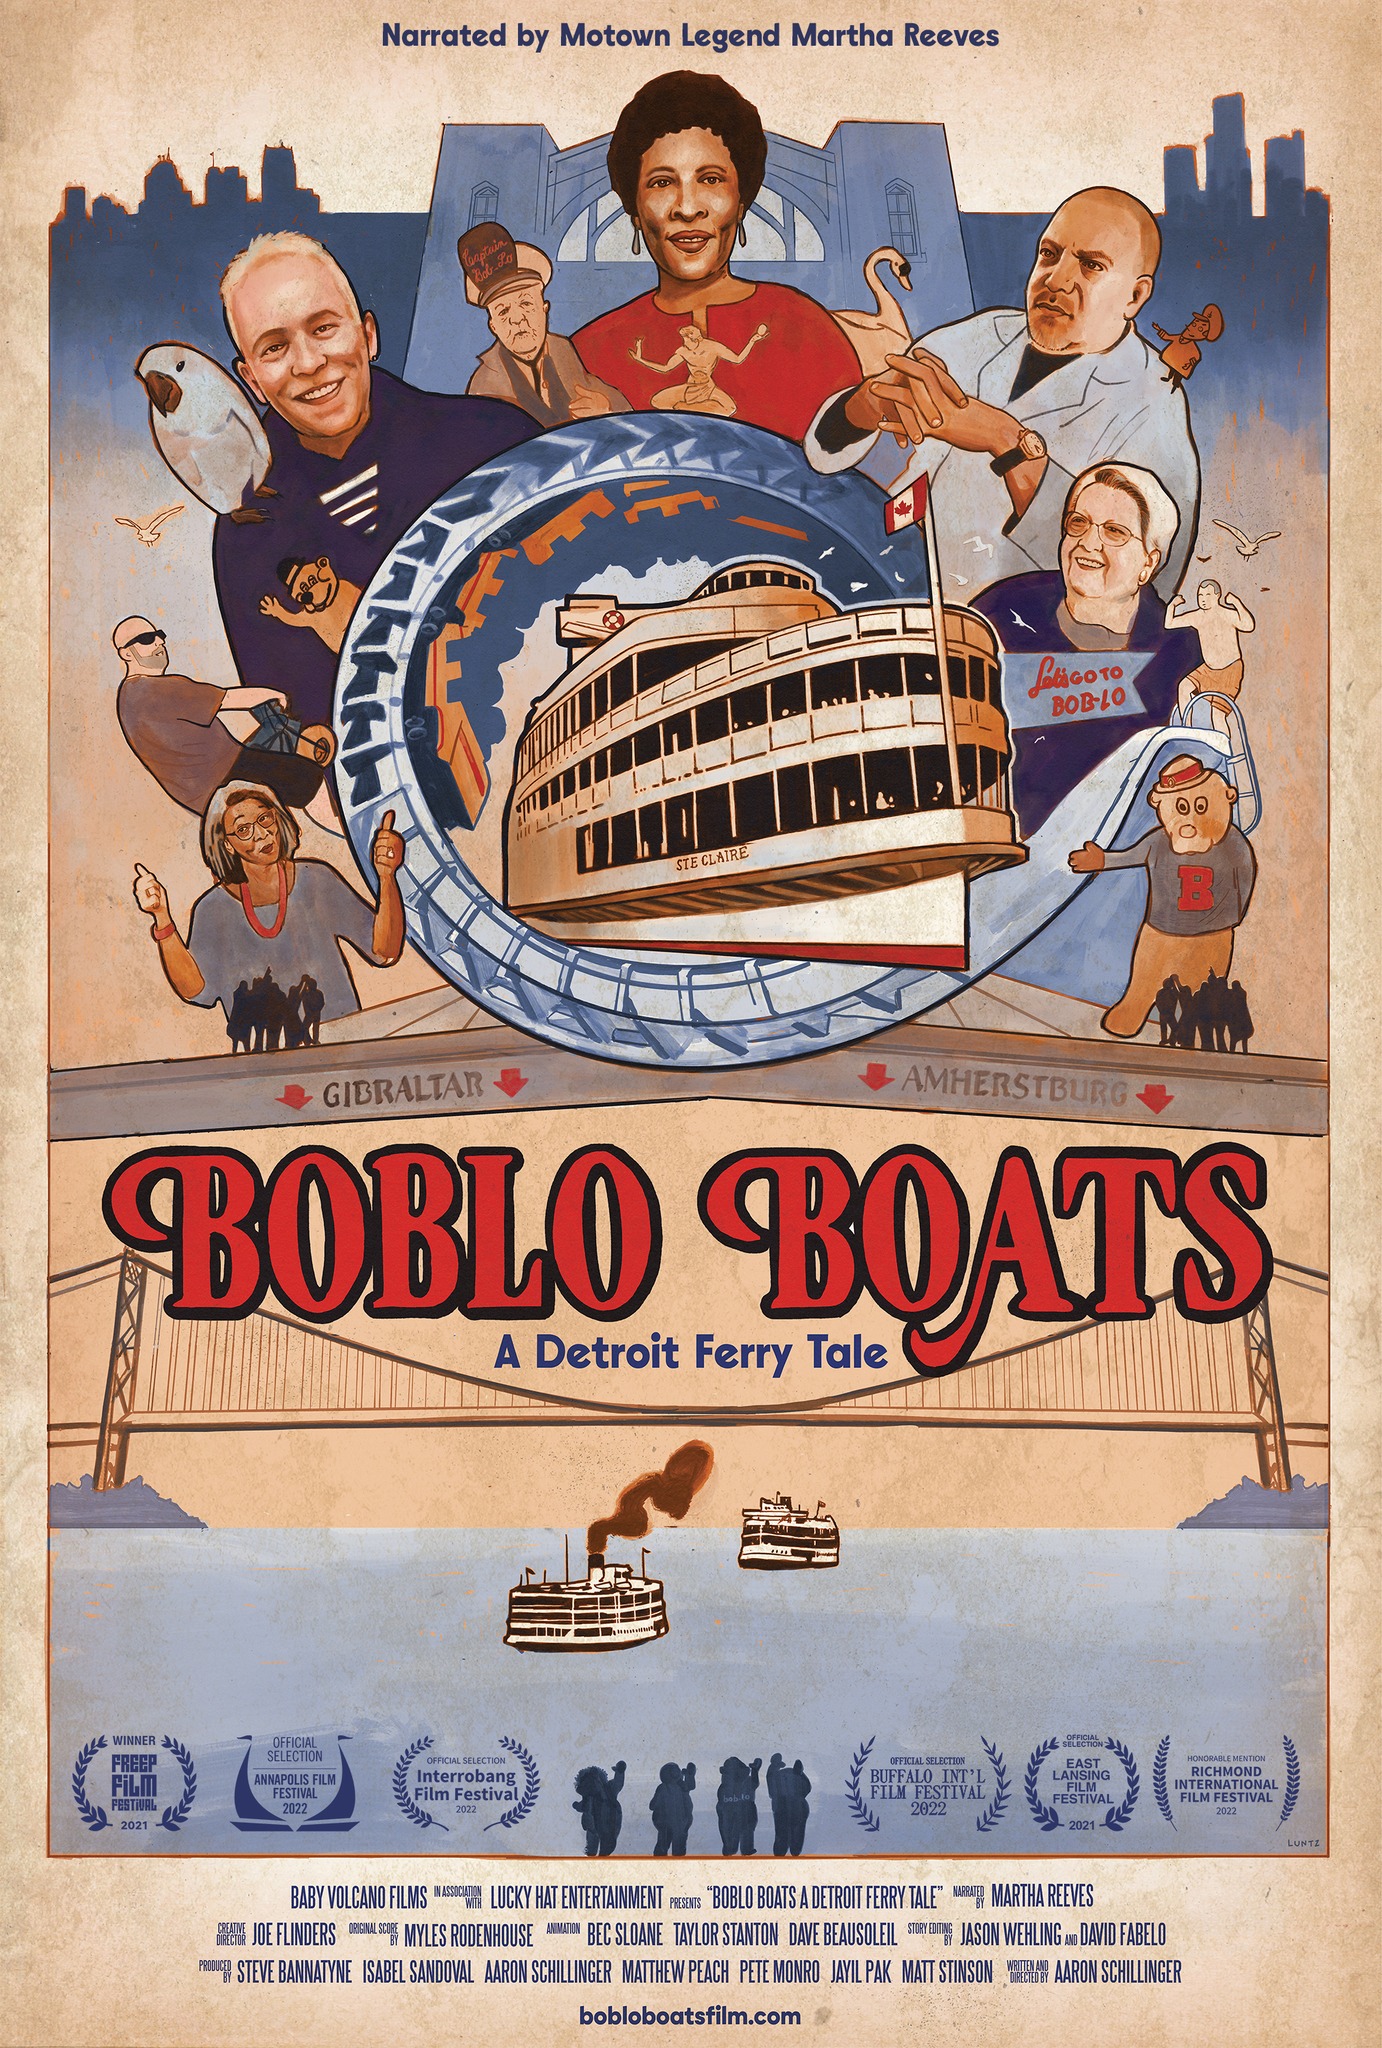 Boblo Boats documentary movie poster featuring the boblo boat